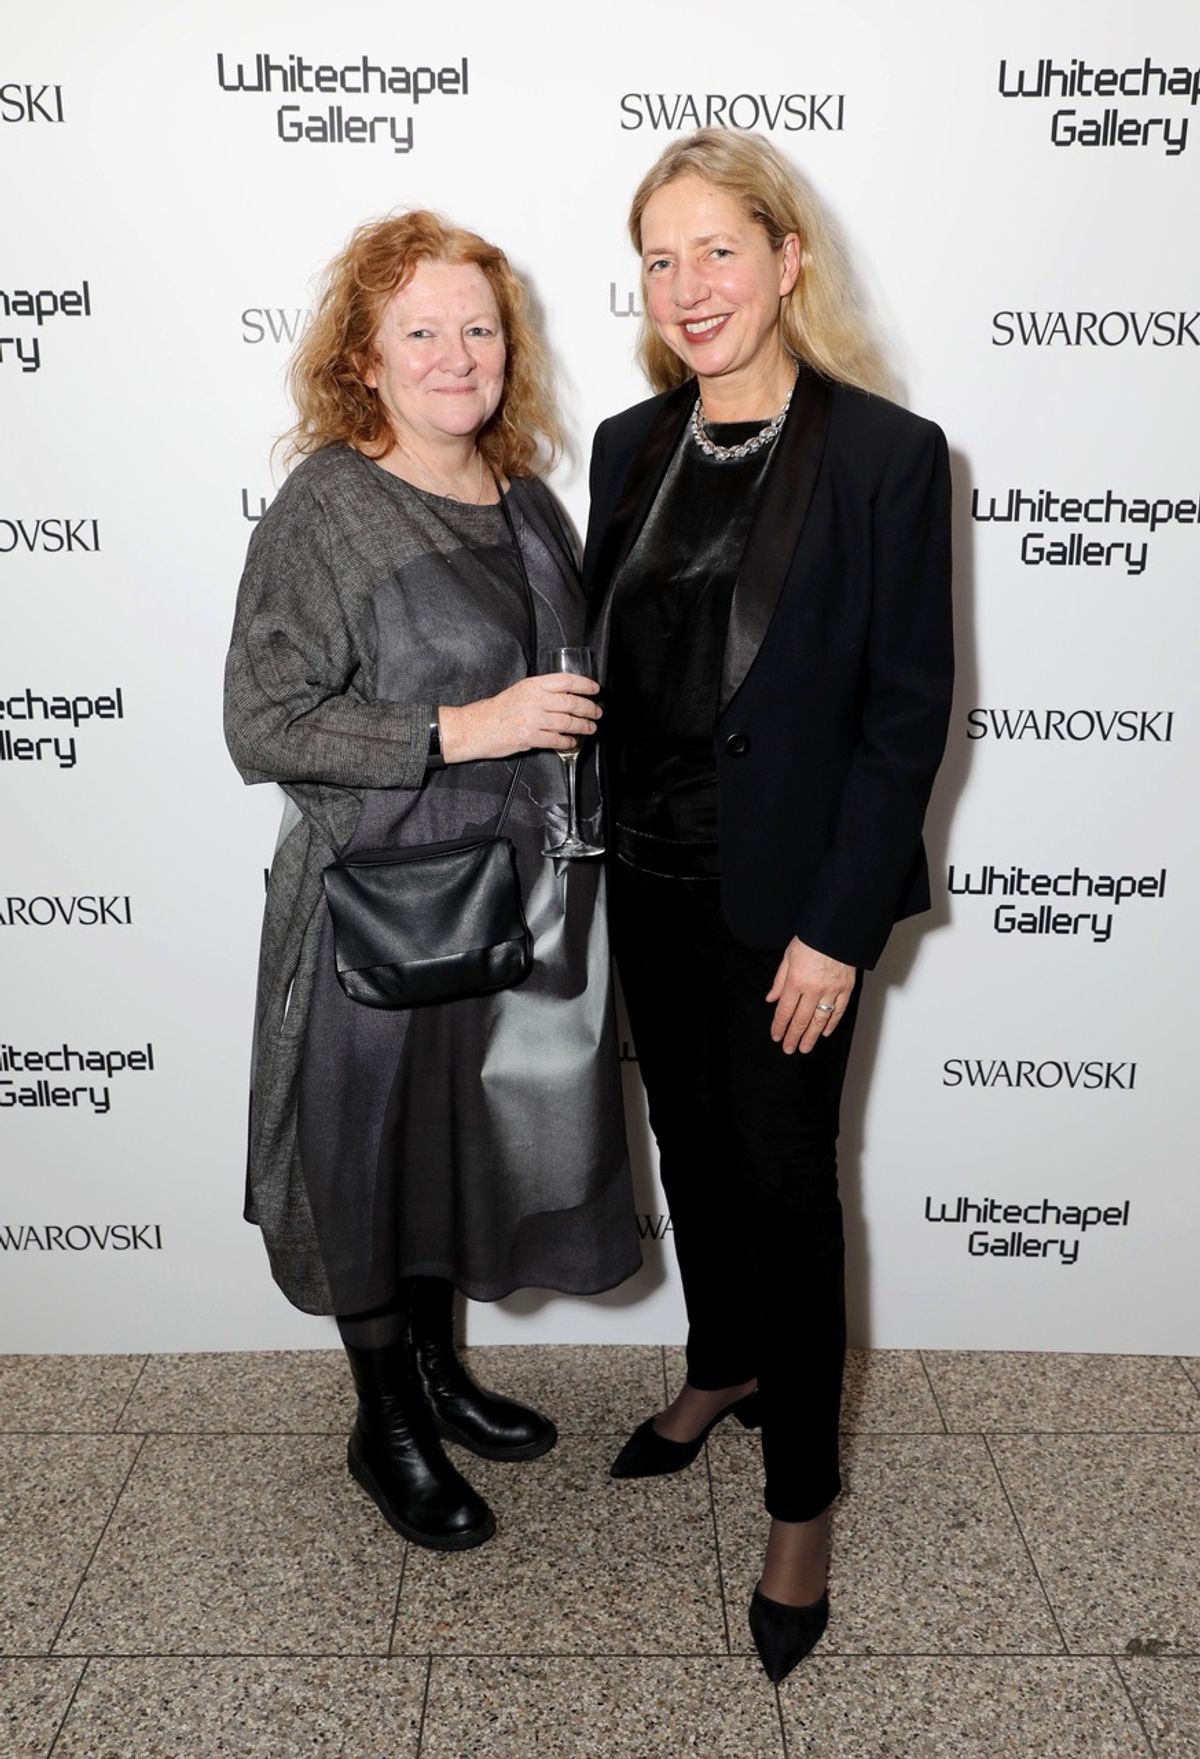 Rachel Whiteread, left, with Iwona Blazwick, director of the Whitechapel Gallery Courtesy of the Whitechapel Gallery